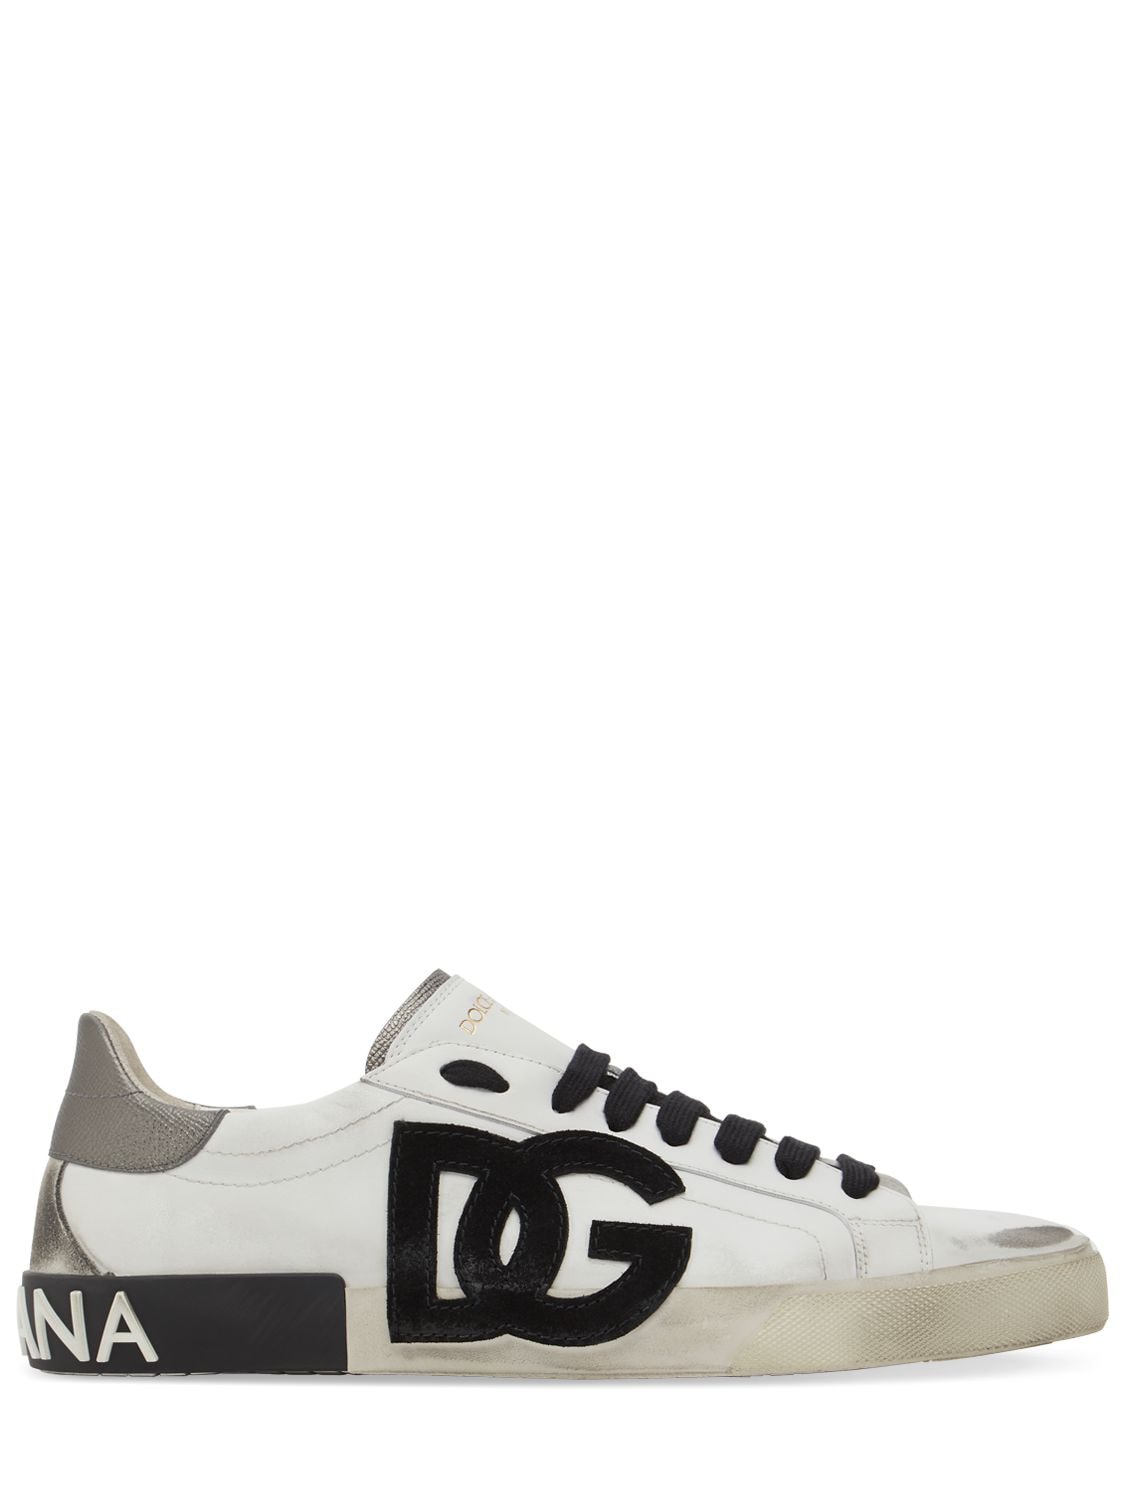 Dolce & Gabbana New Portofino Dg Low Top Sneakers In White,black